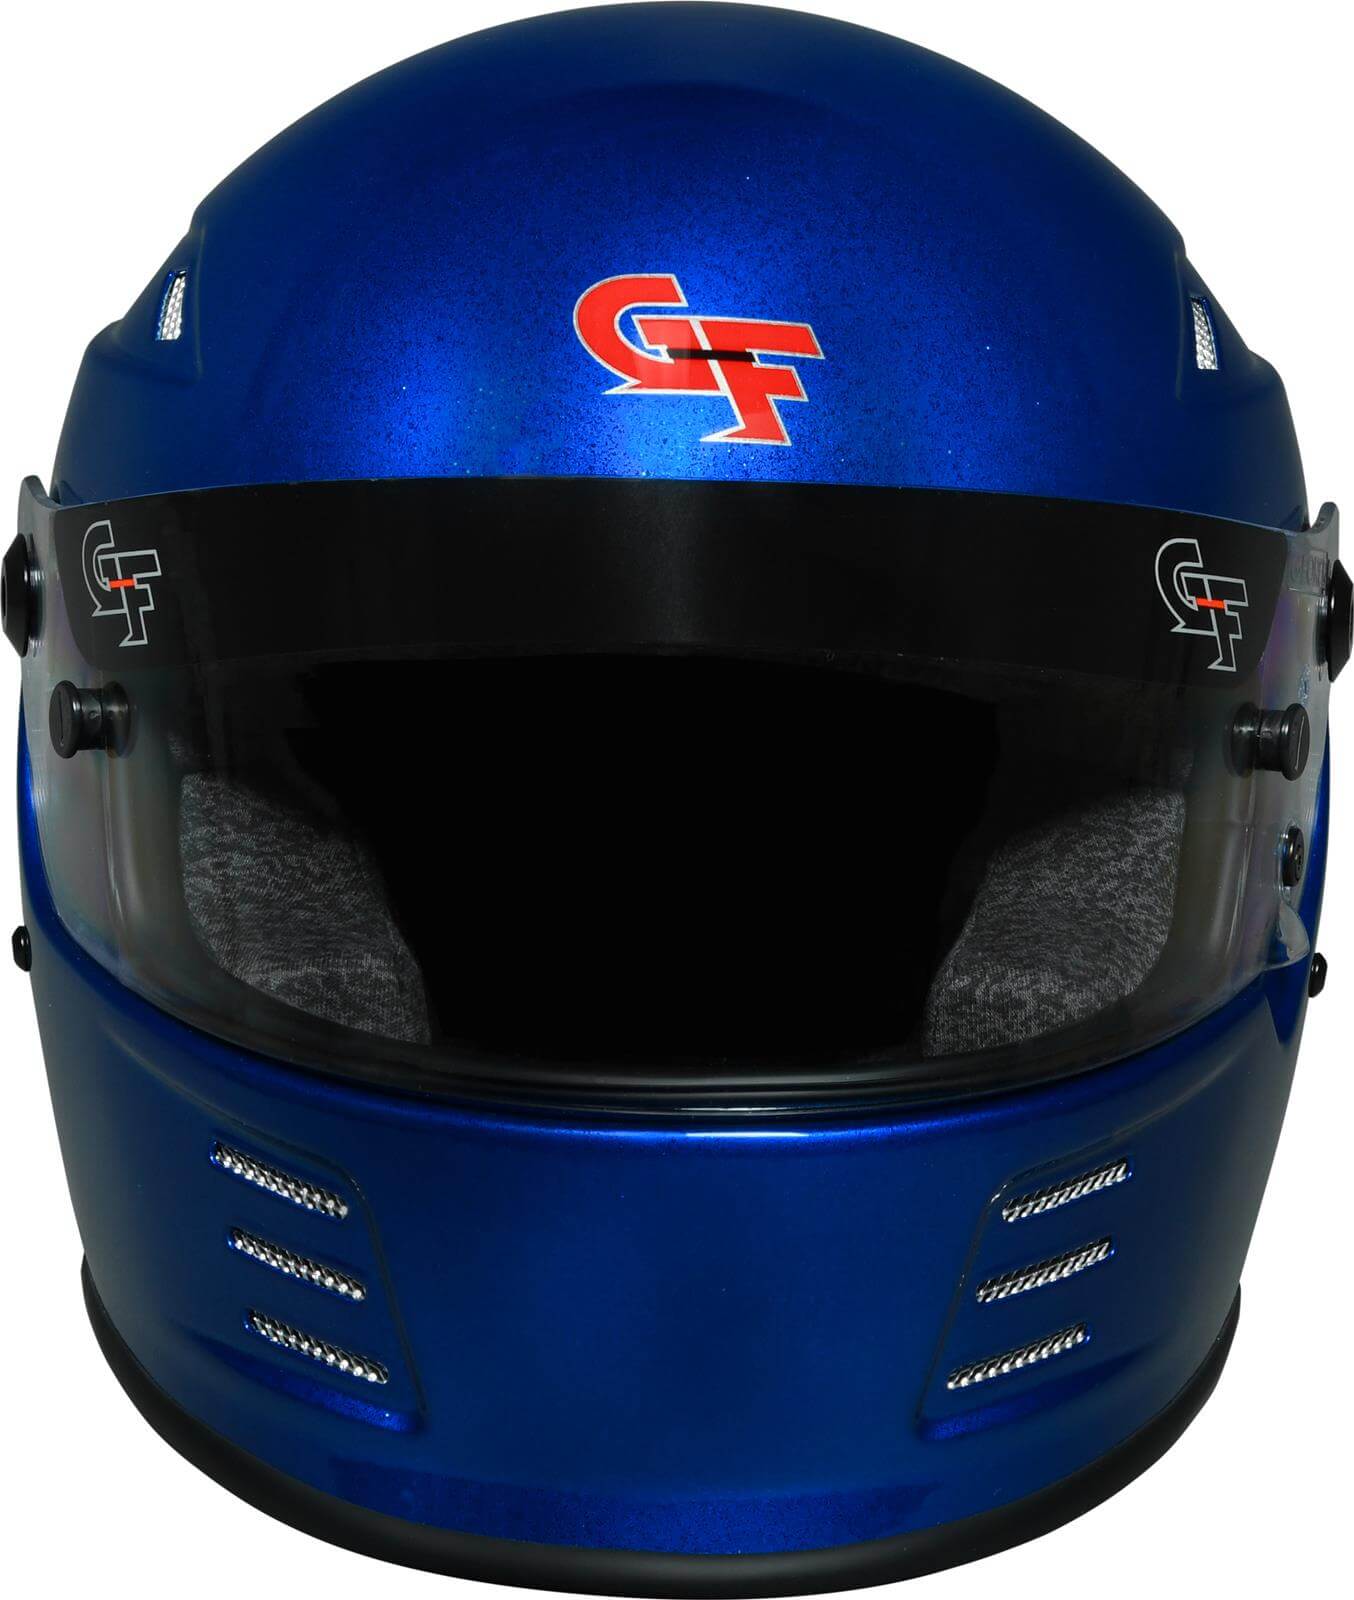 REVO FLASH SA2020 Helmet - $313.65